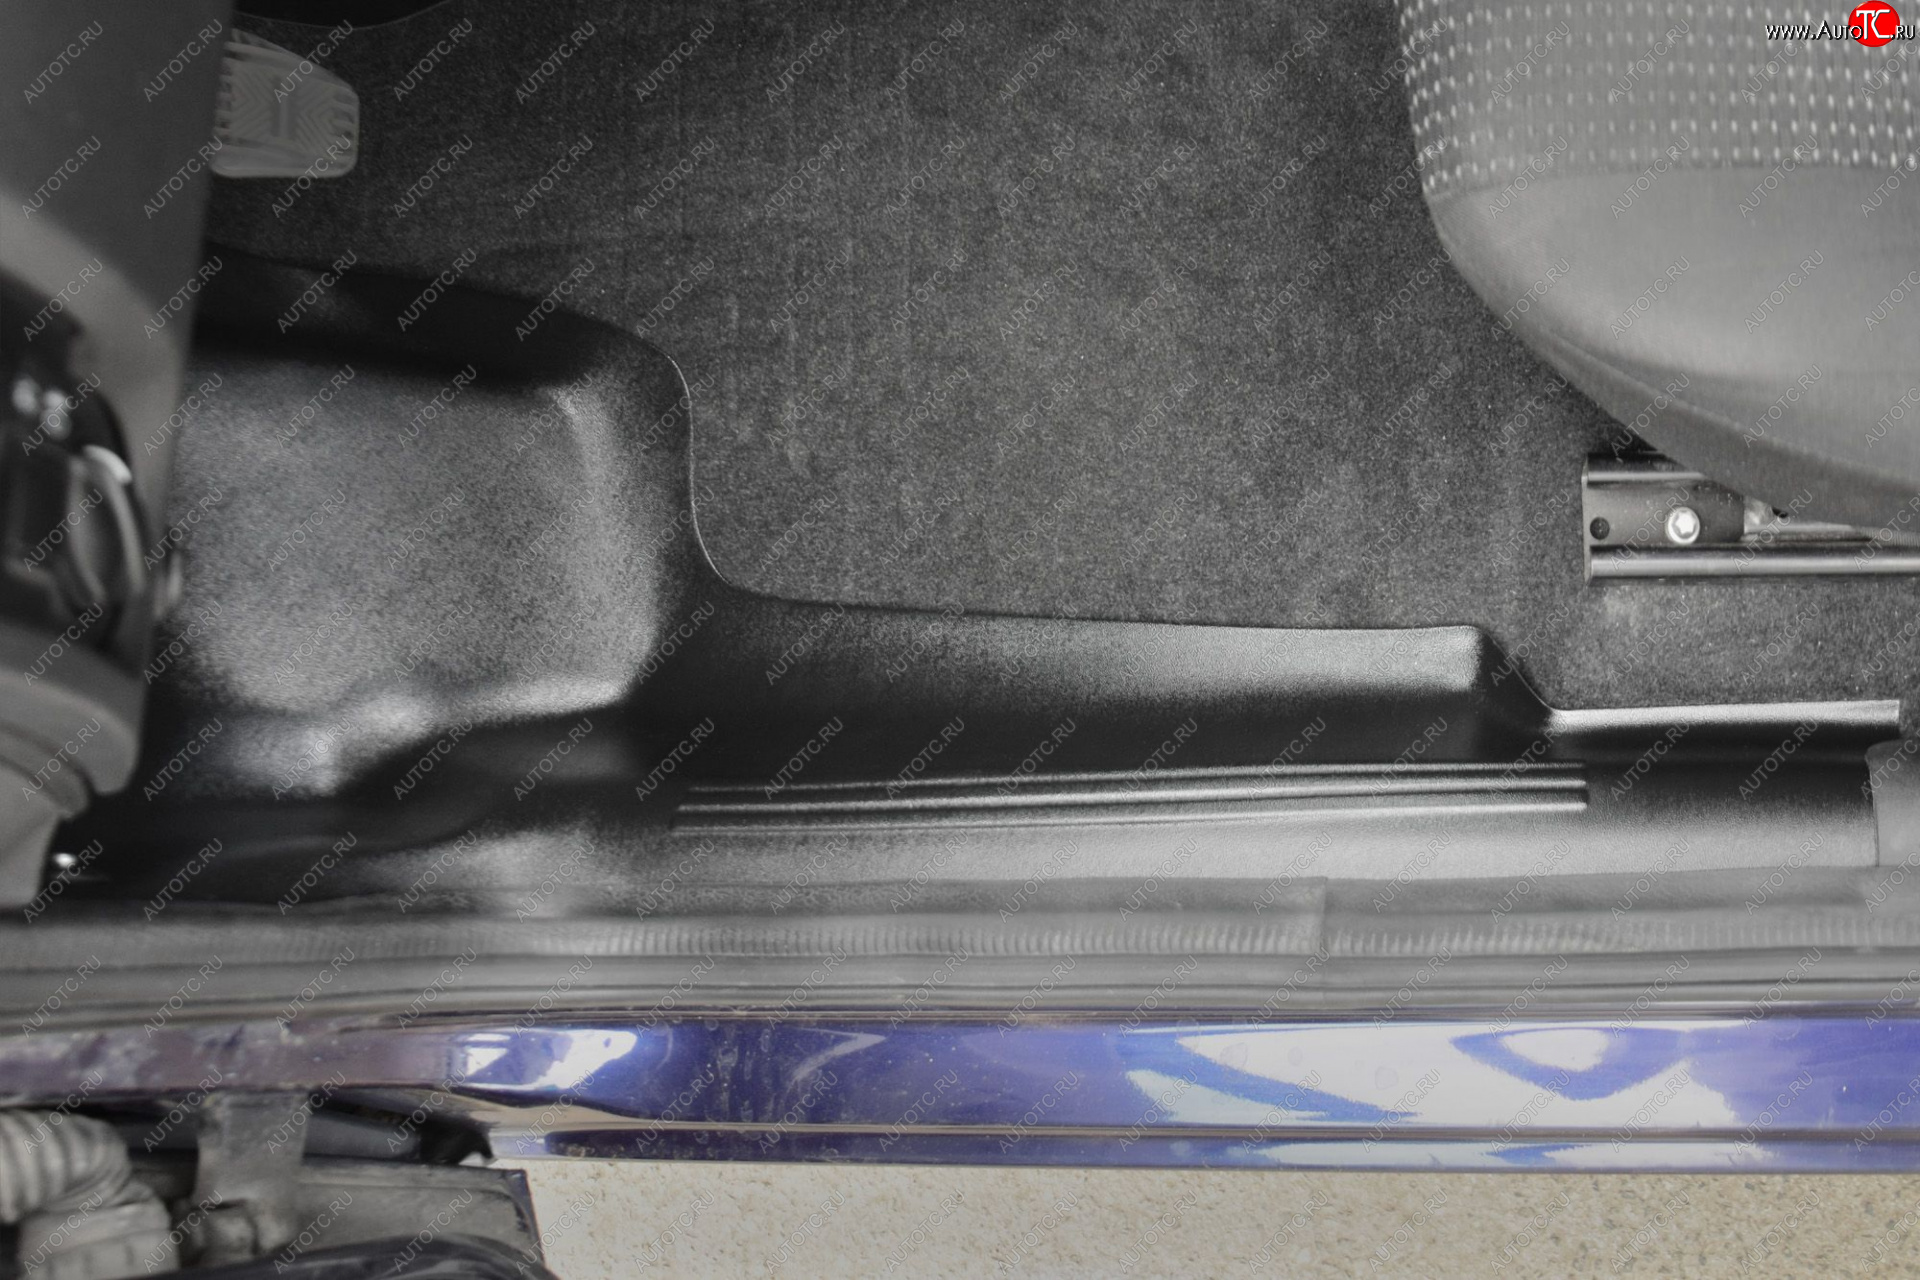 2 399 р. Накладки на ковролин пола Petroil Tuning Лада Гранта 2190 седан дорестайлинг (2011-2017) (Передние боковые)  с доставкой в г. Калуга